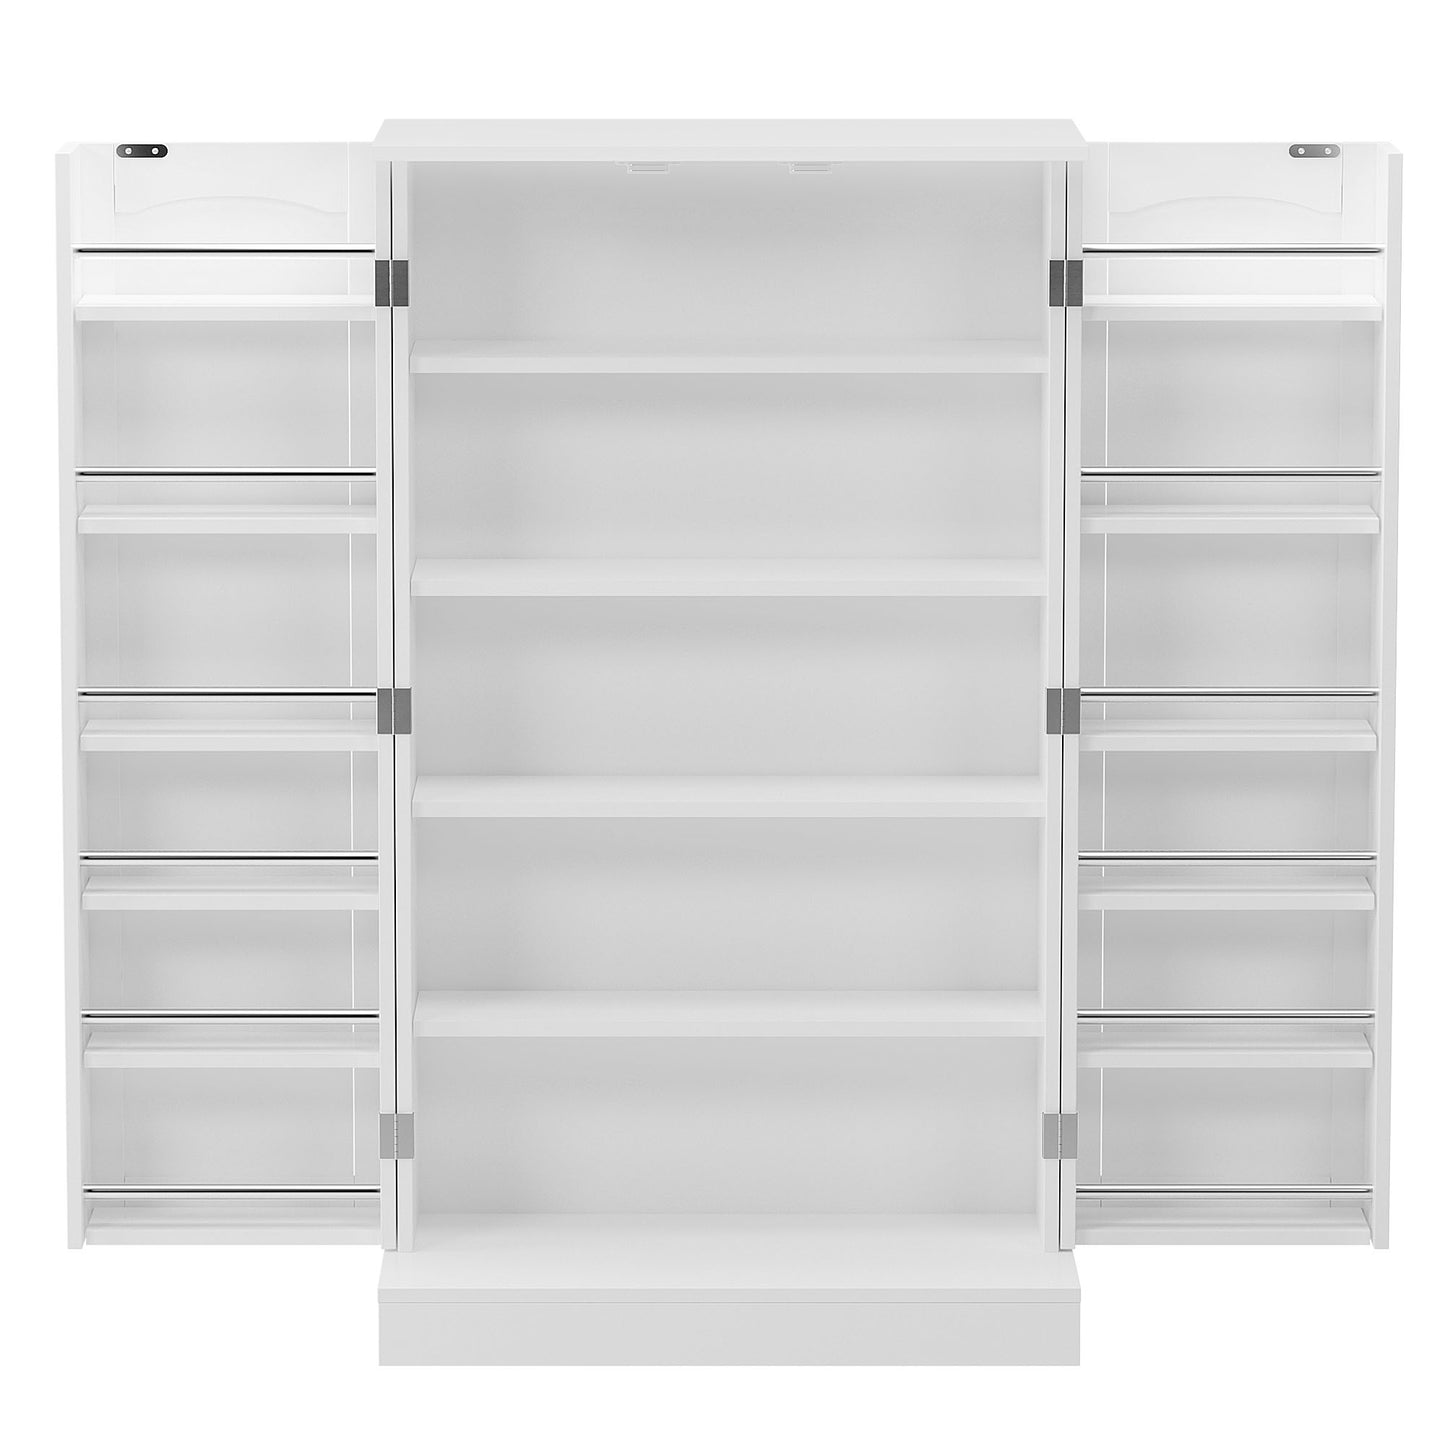 Soges 5 Level Kitchen Storage Cabinet, Wooden Kitchen Food Lockers with Adjustable Shelves, White